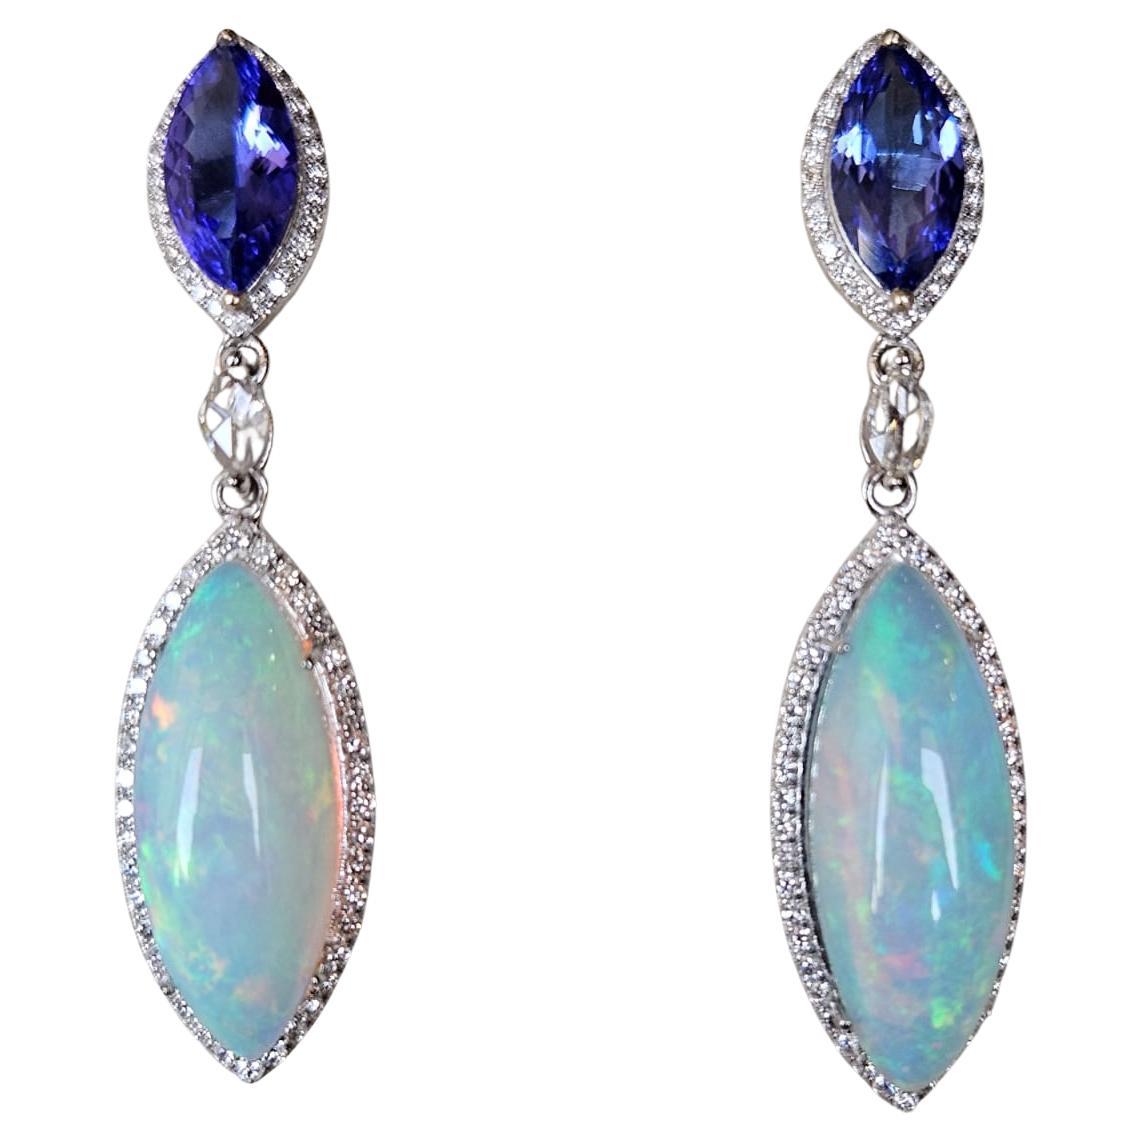 2.82 carats Tanzanite, 13.93 carats Ethiopian Opal & Diamond Chandelier Earrings